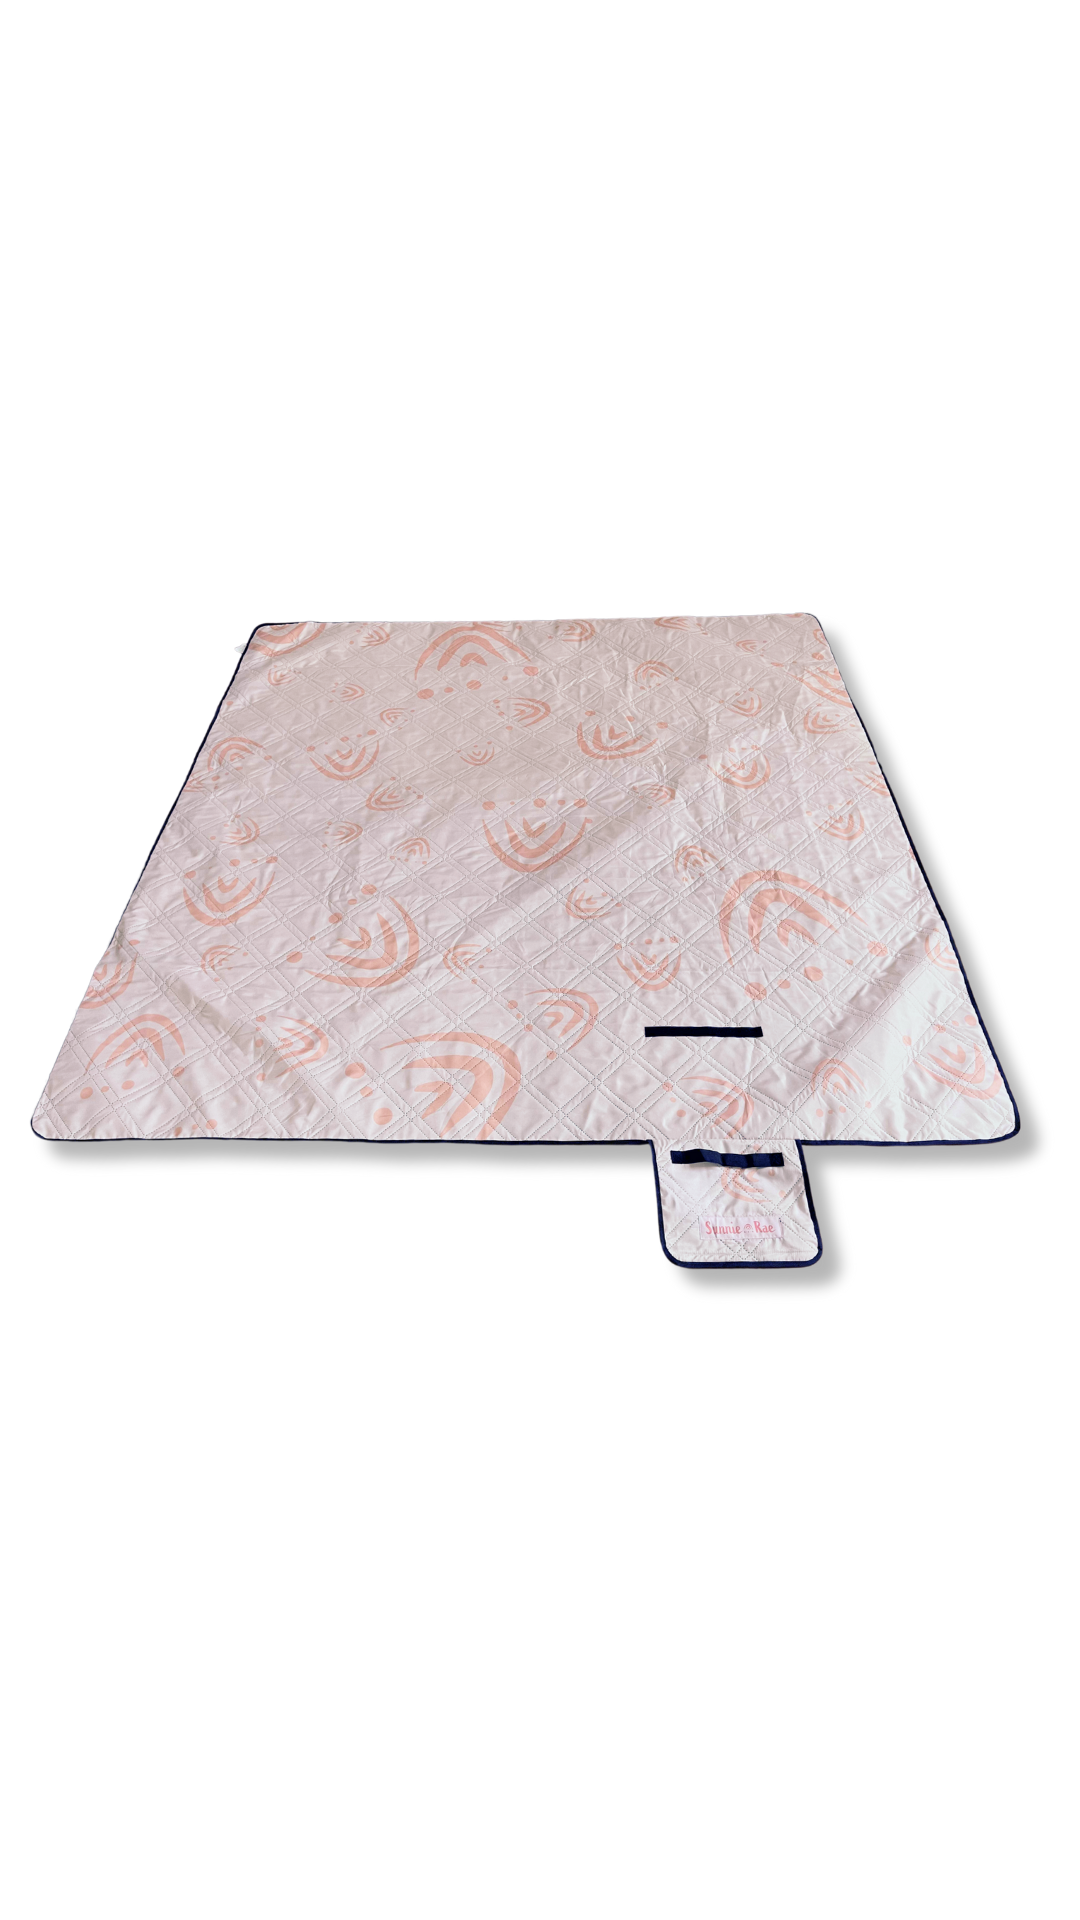 Foldable Picnic Blanket | Outdoor Picnic Blanket